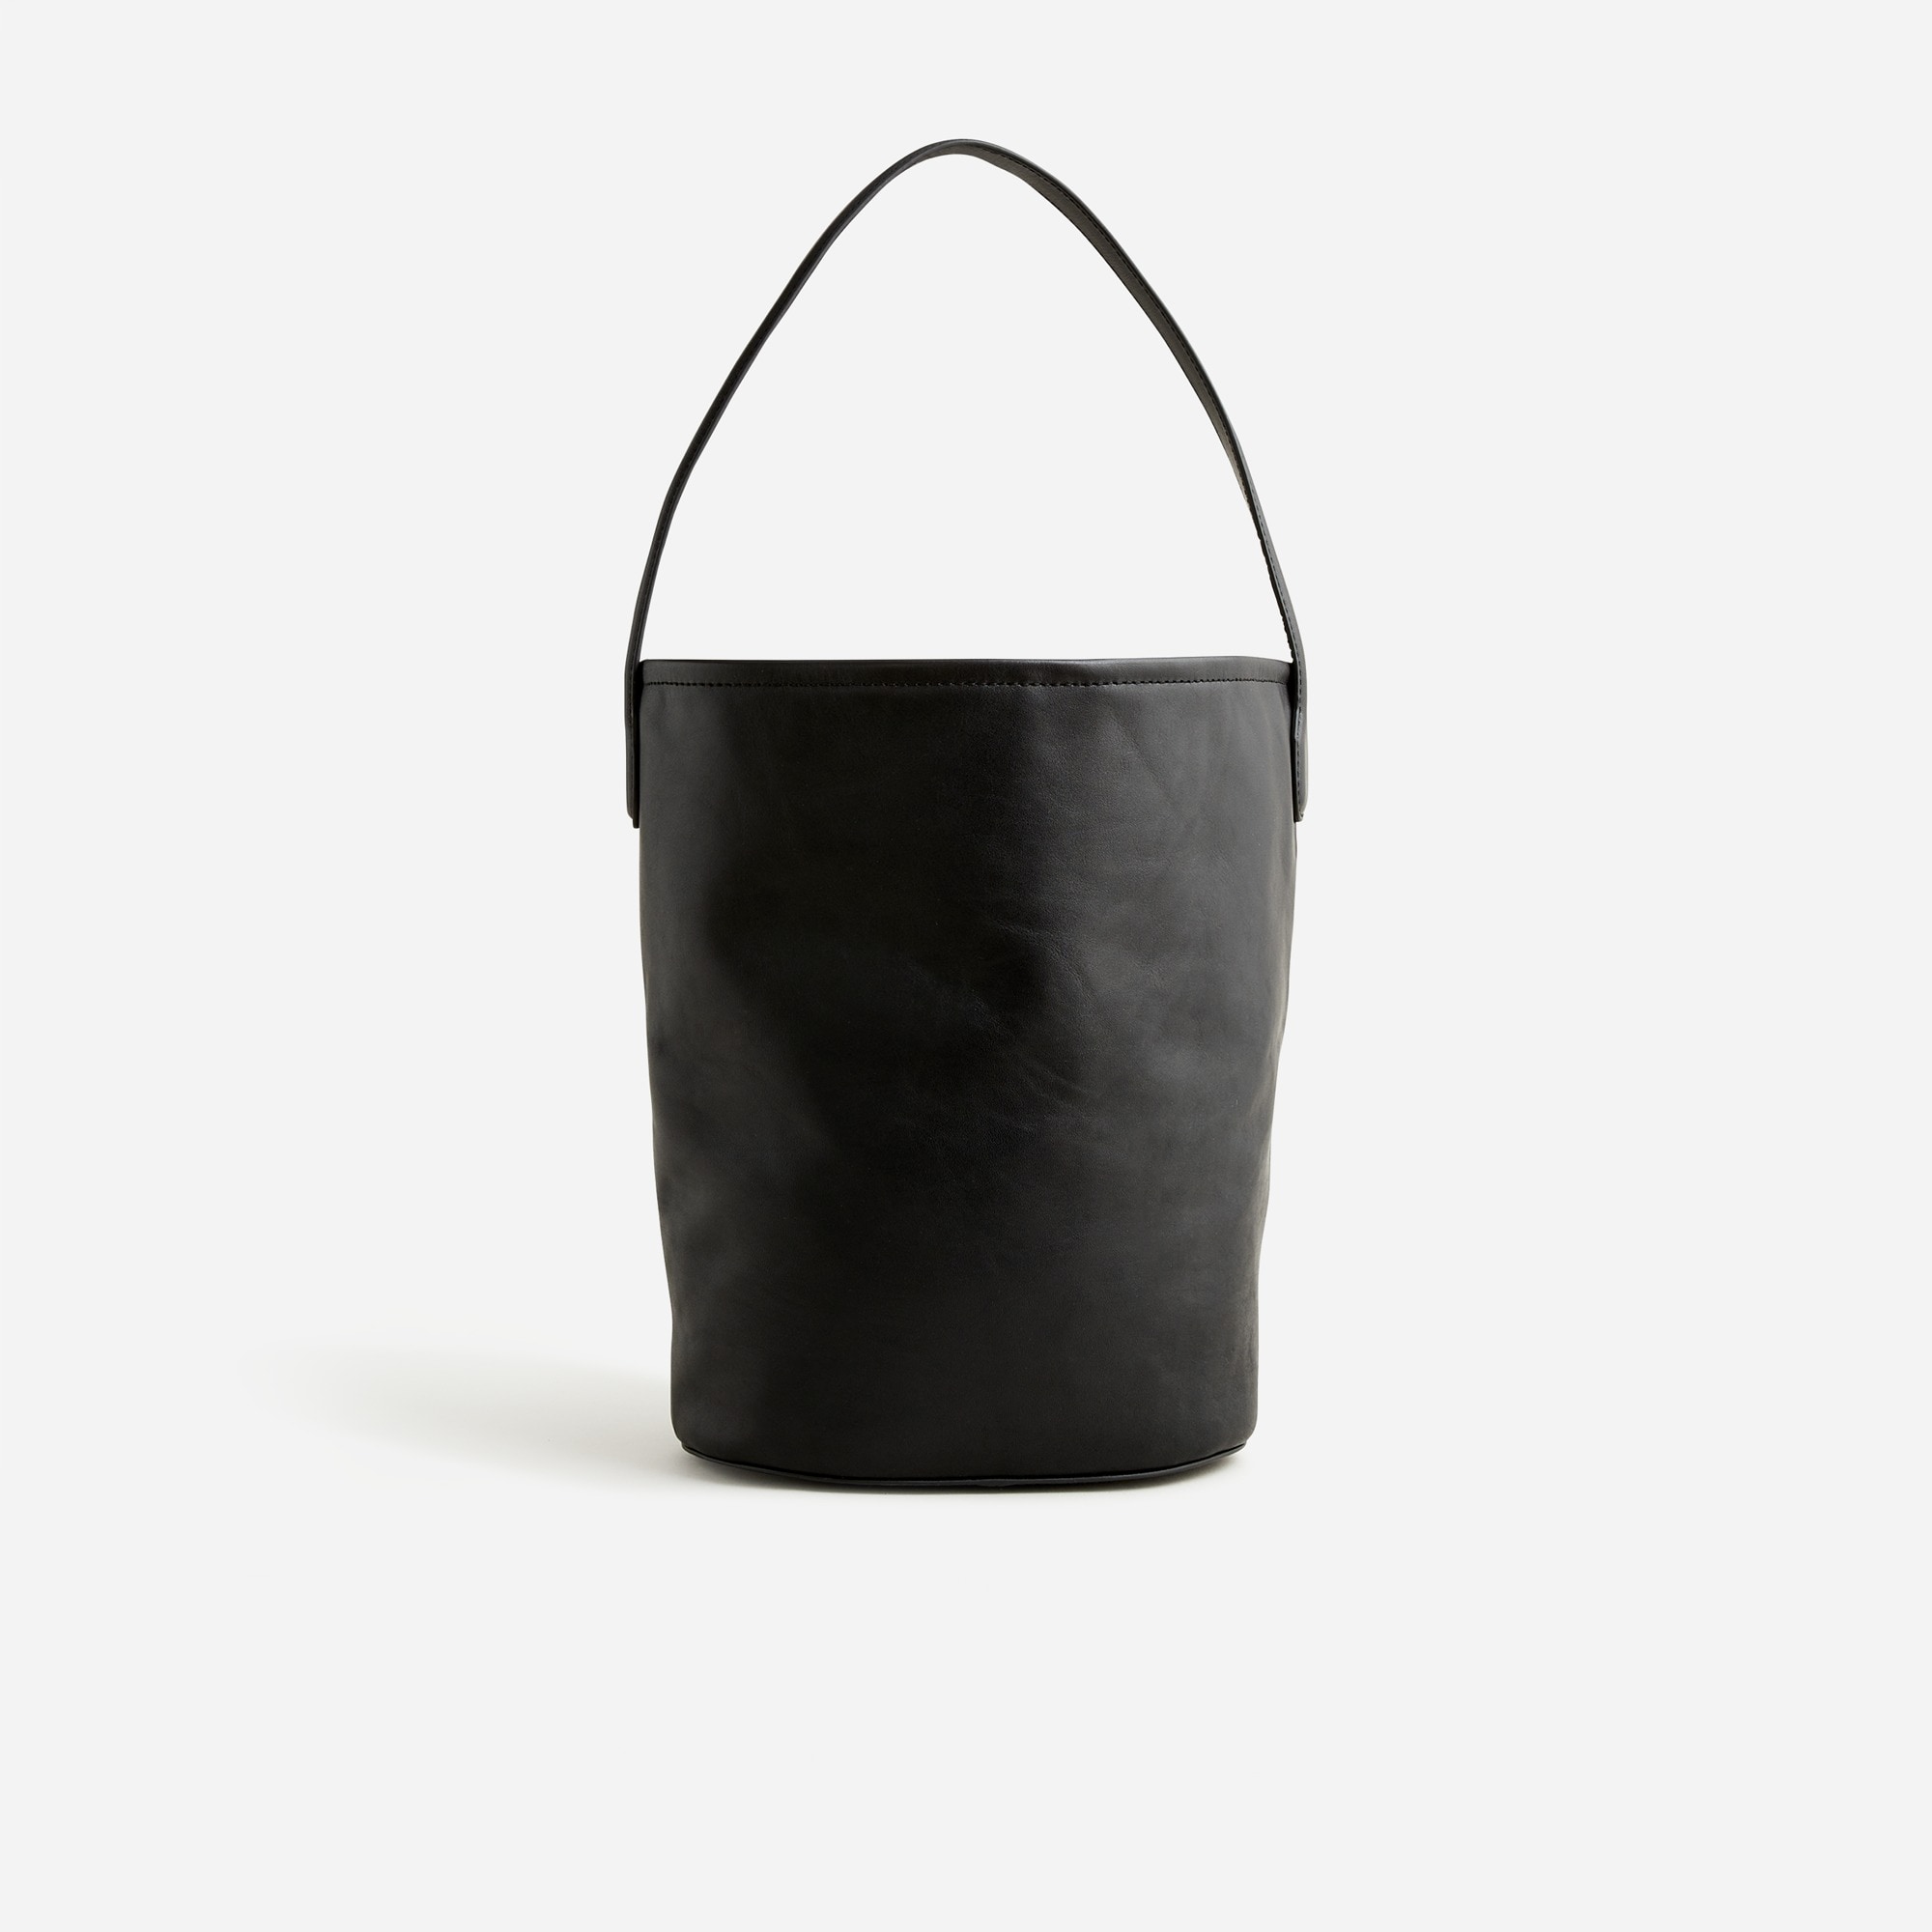 Jcrew Berkeley bucket bag in leather